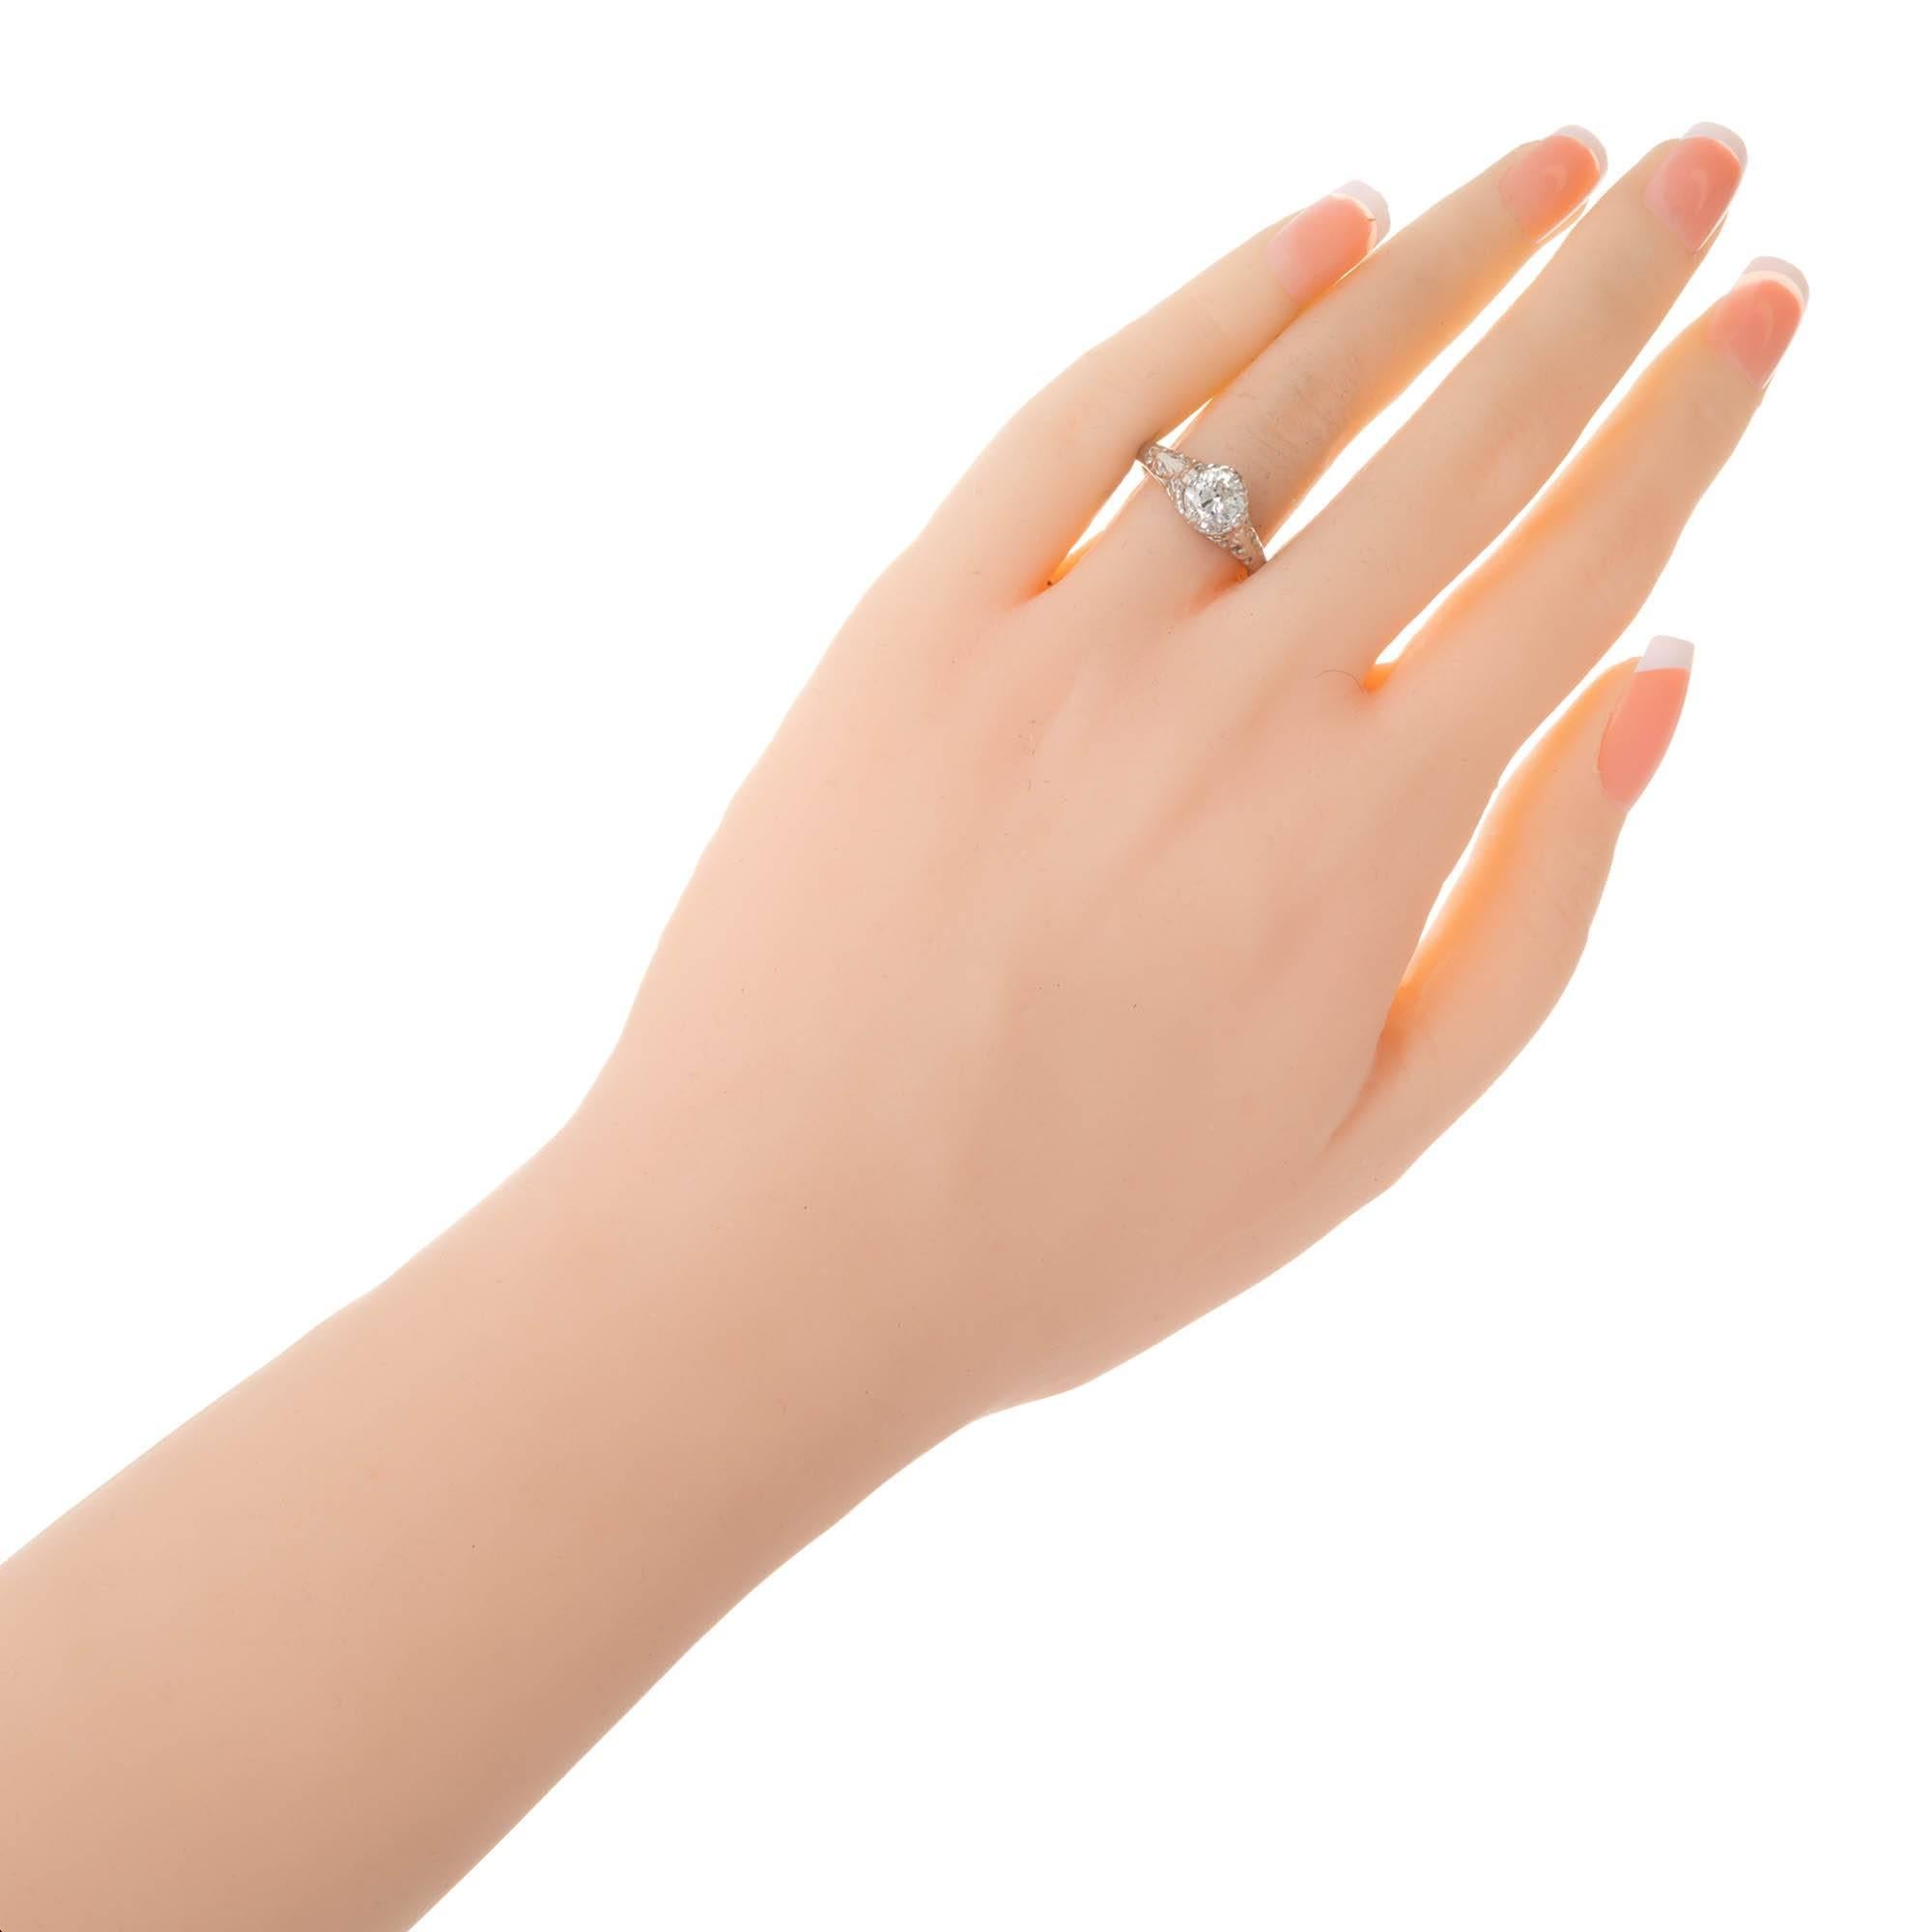 Old European Cut 1.16 Carat Diamond Victorian Hand Pierced Platinum Engagement Ring For Sale